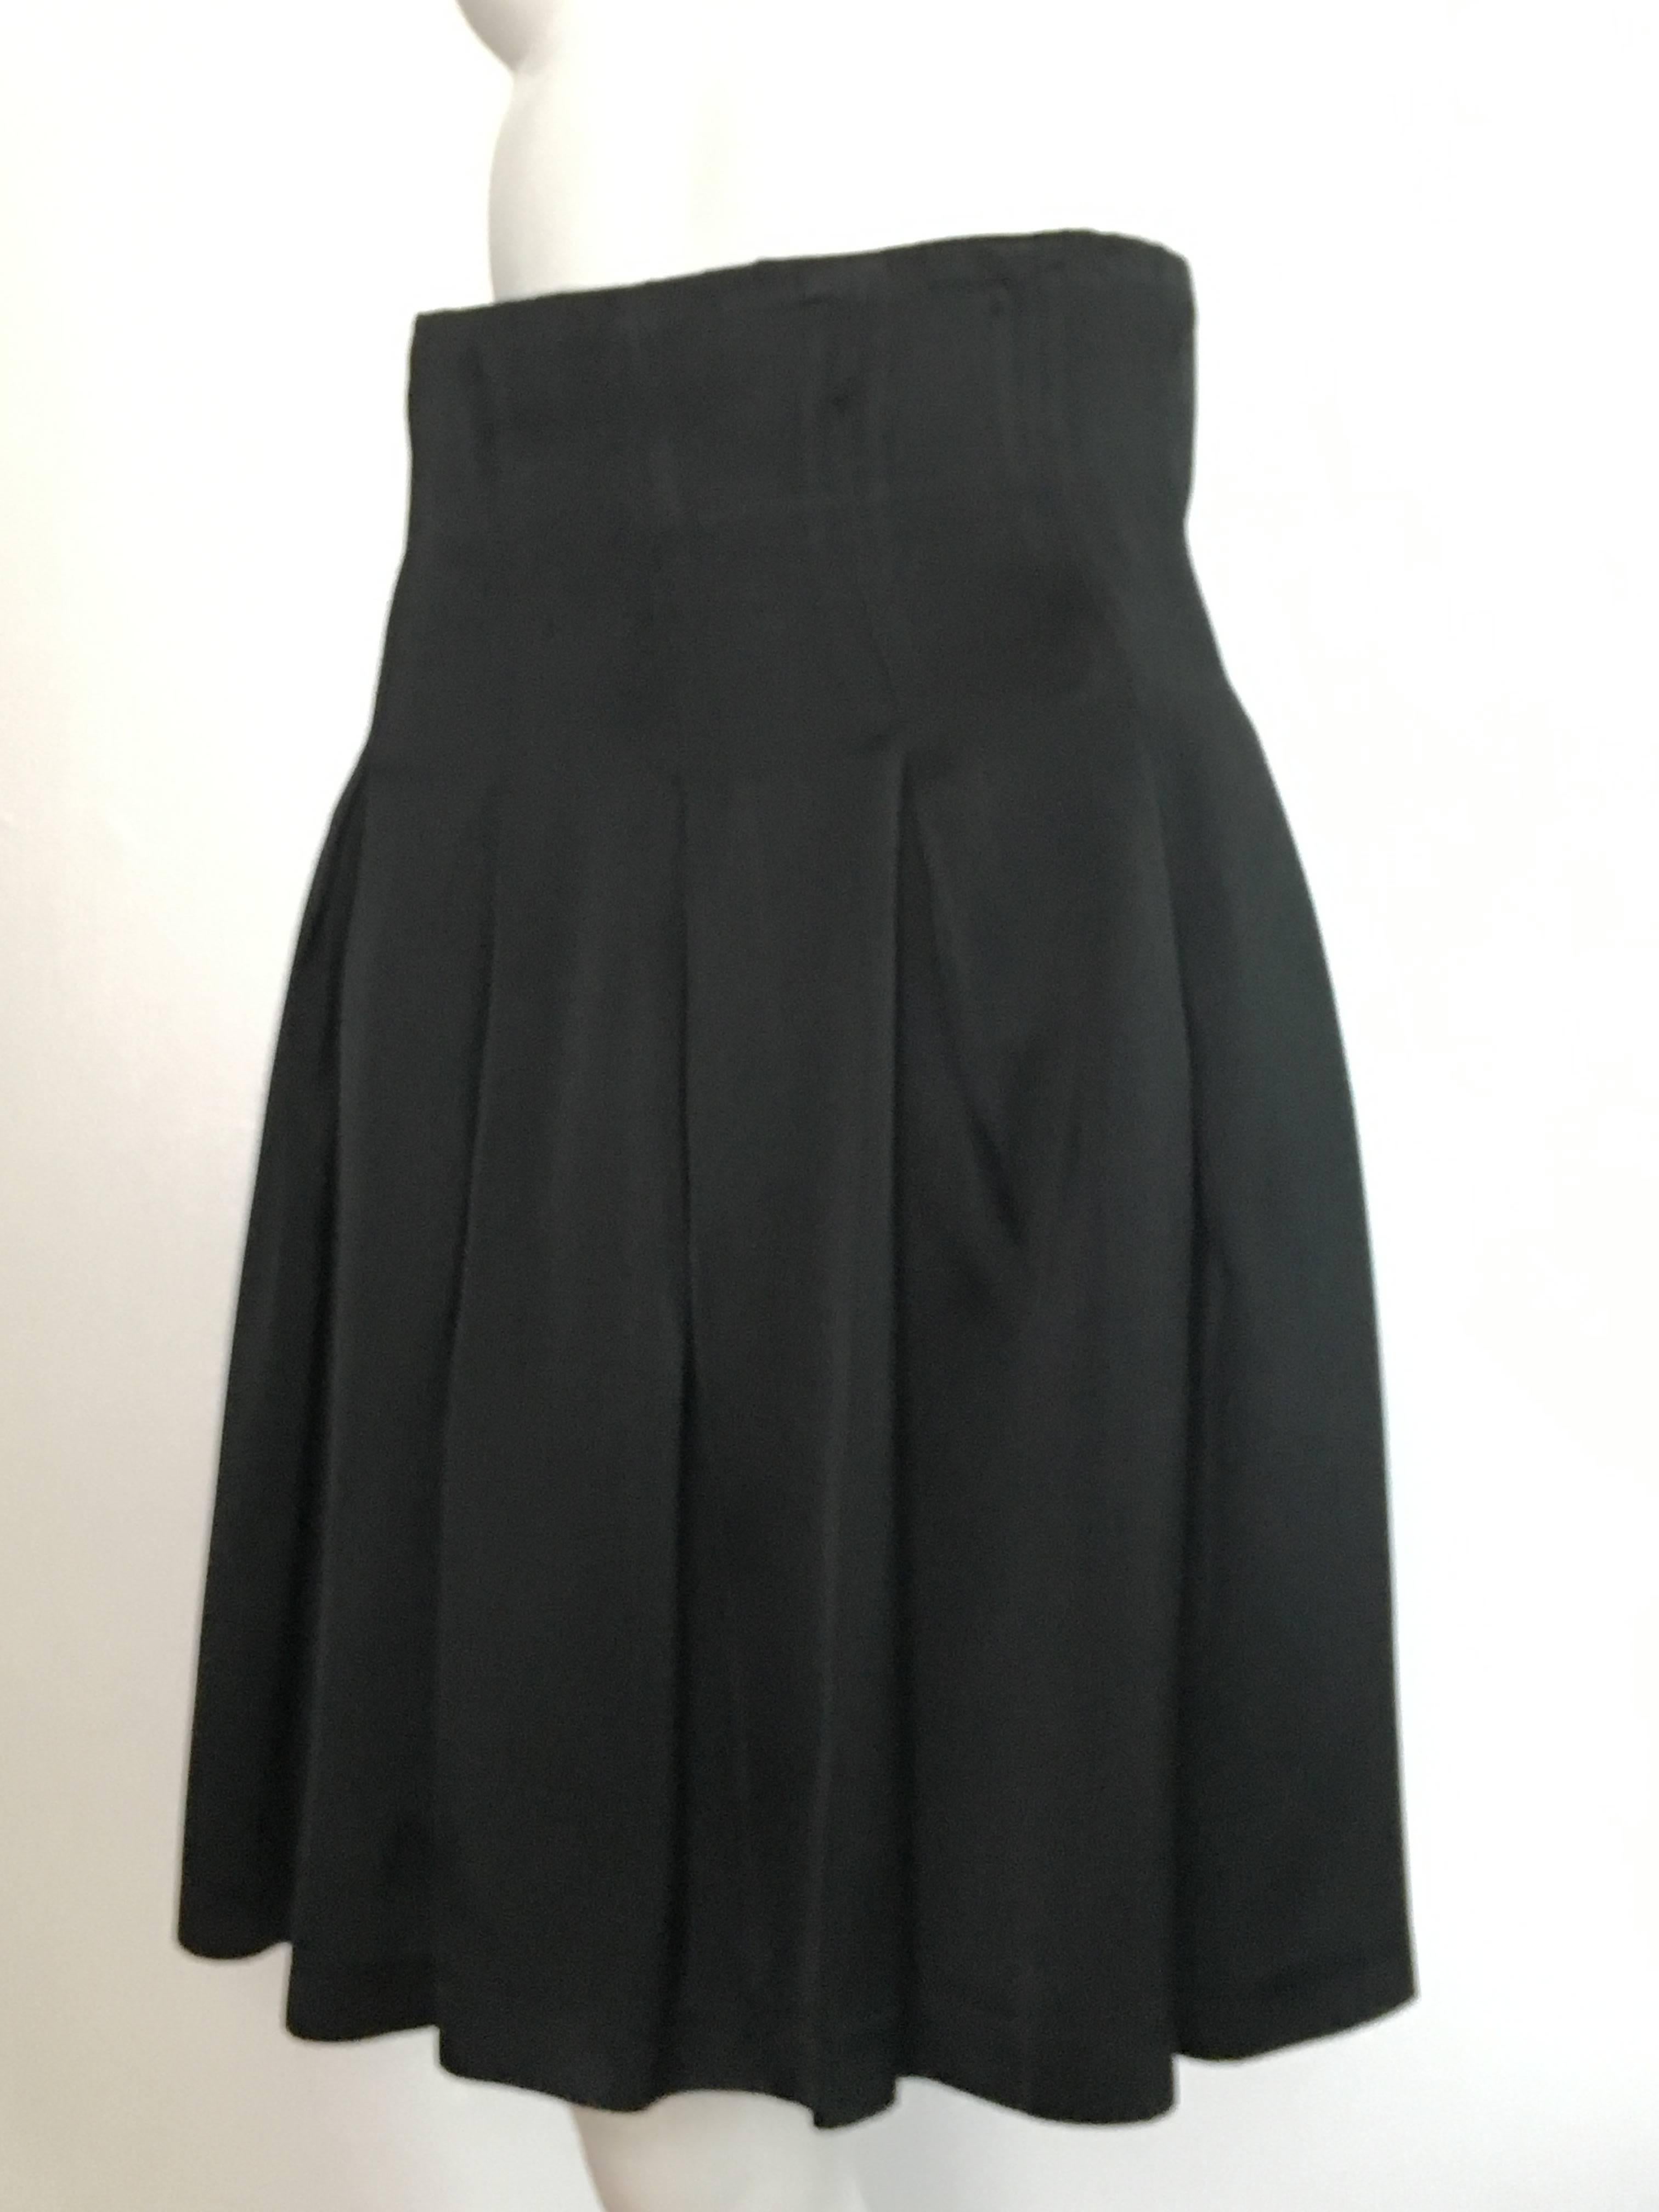 Patrick Kelly Paris 1980s Black Pleated Skirt Size 6. For Sale 6